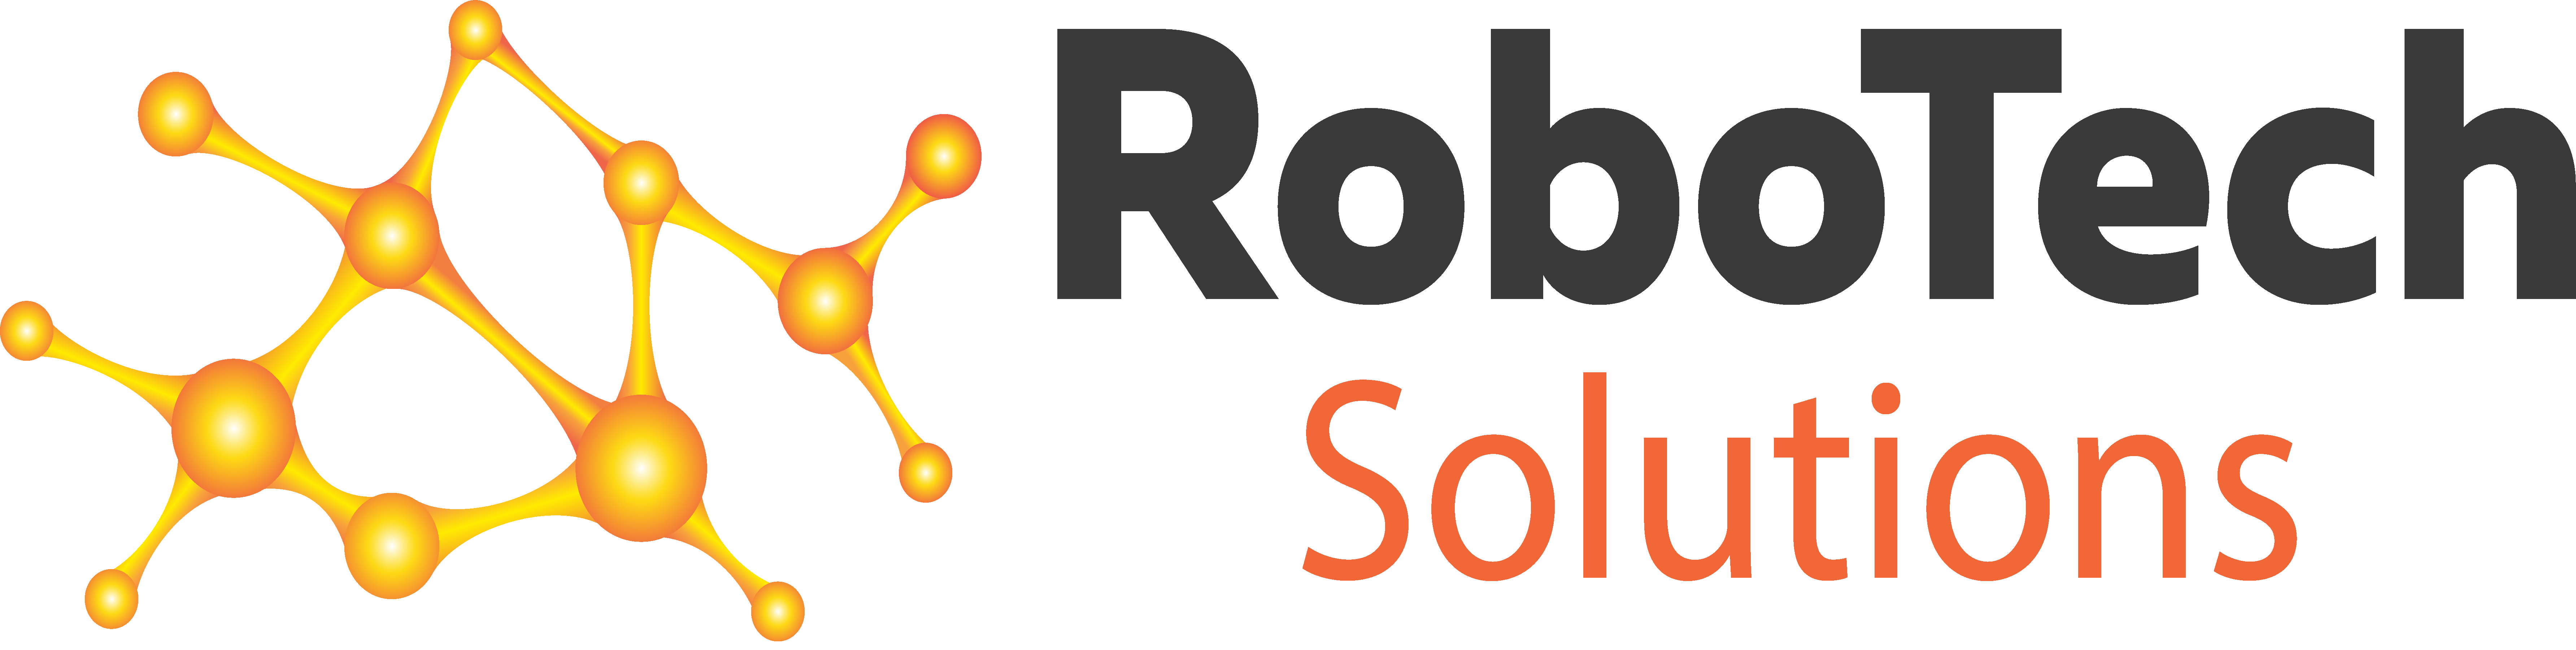 Robotech Solutions